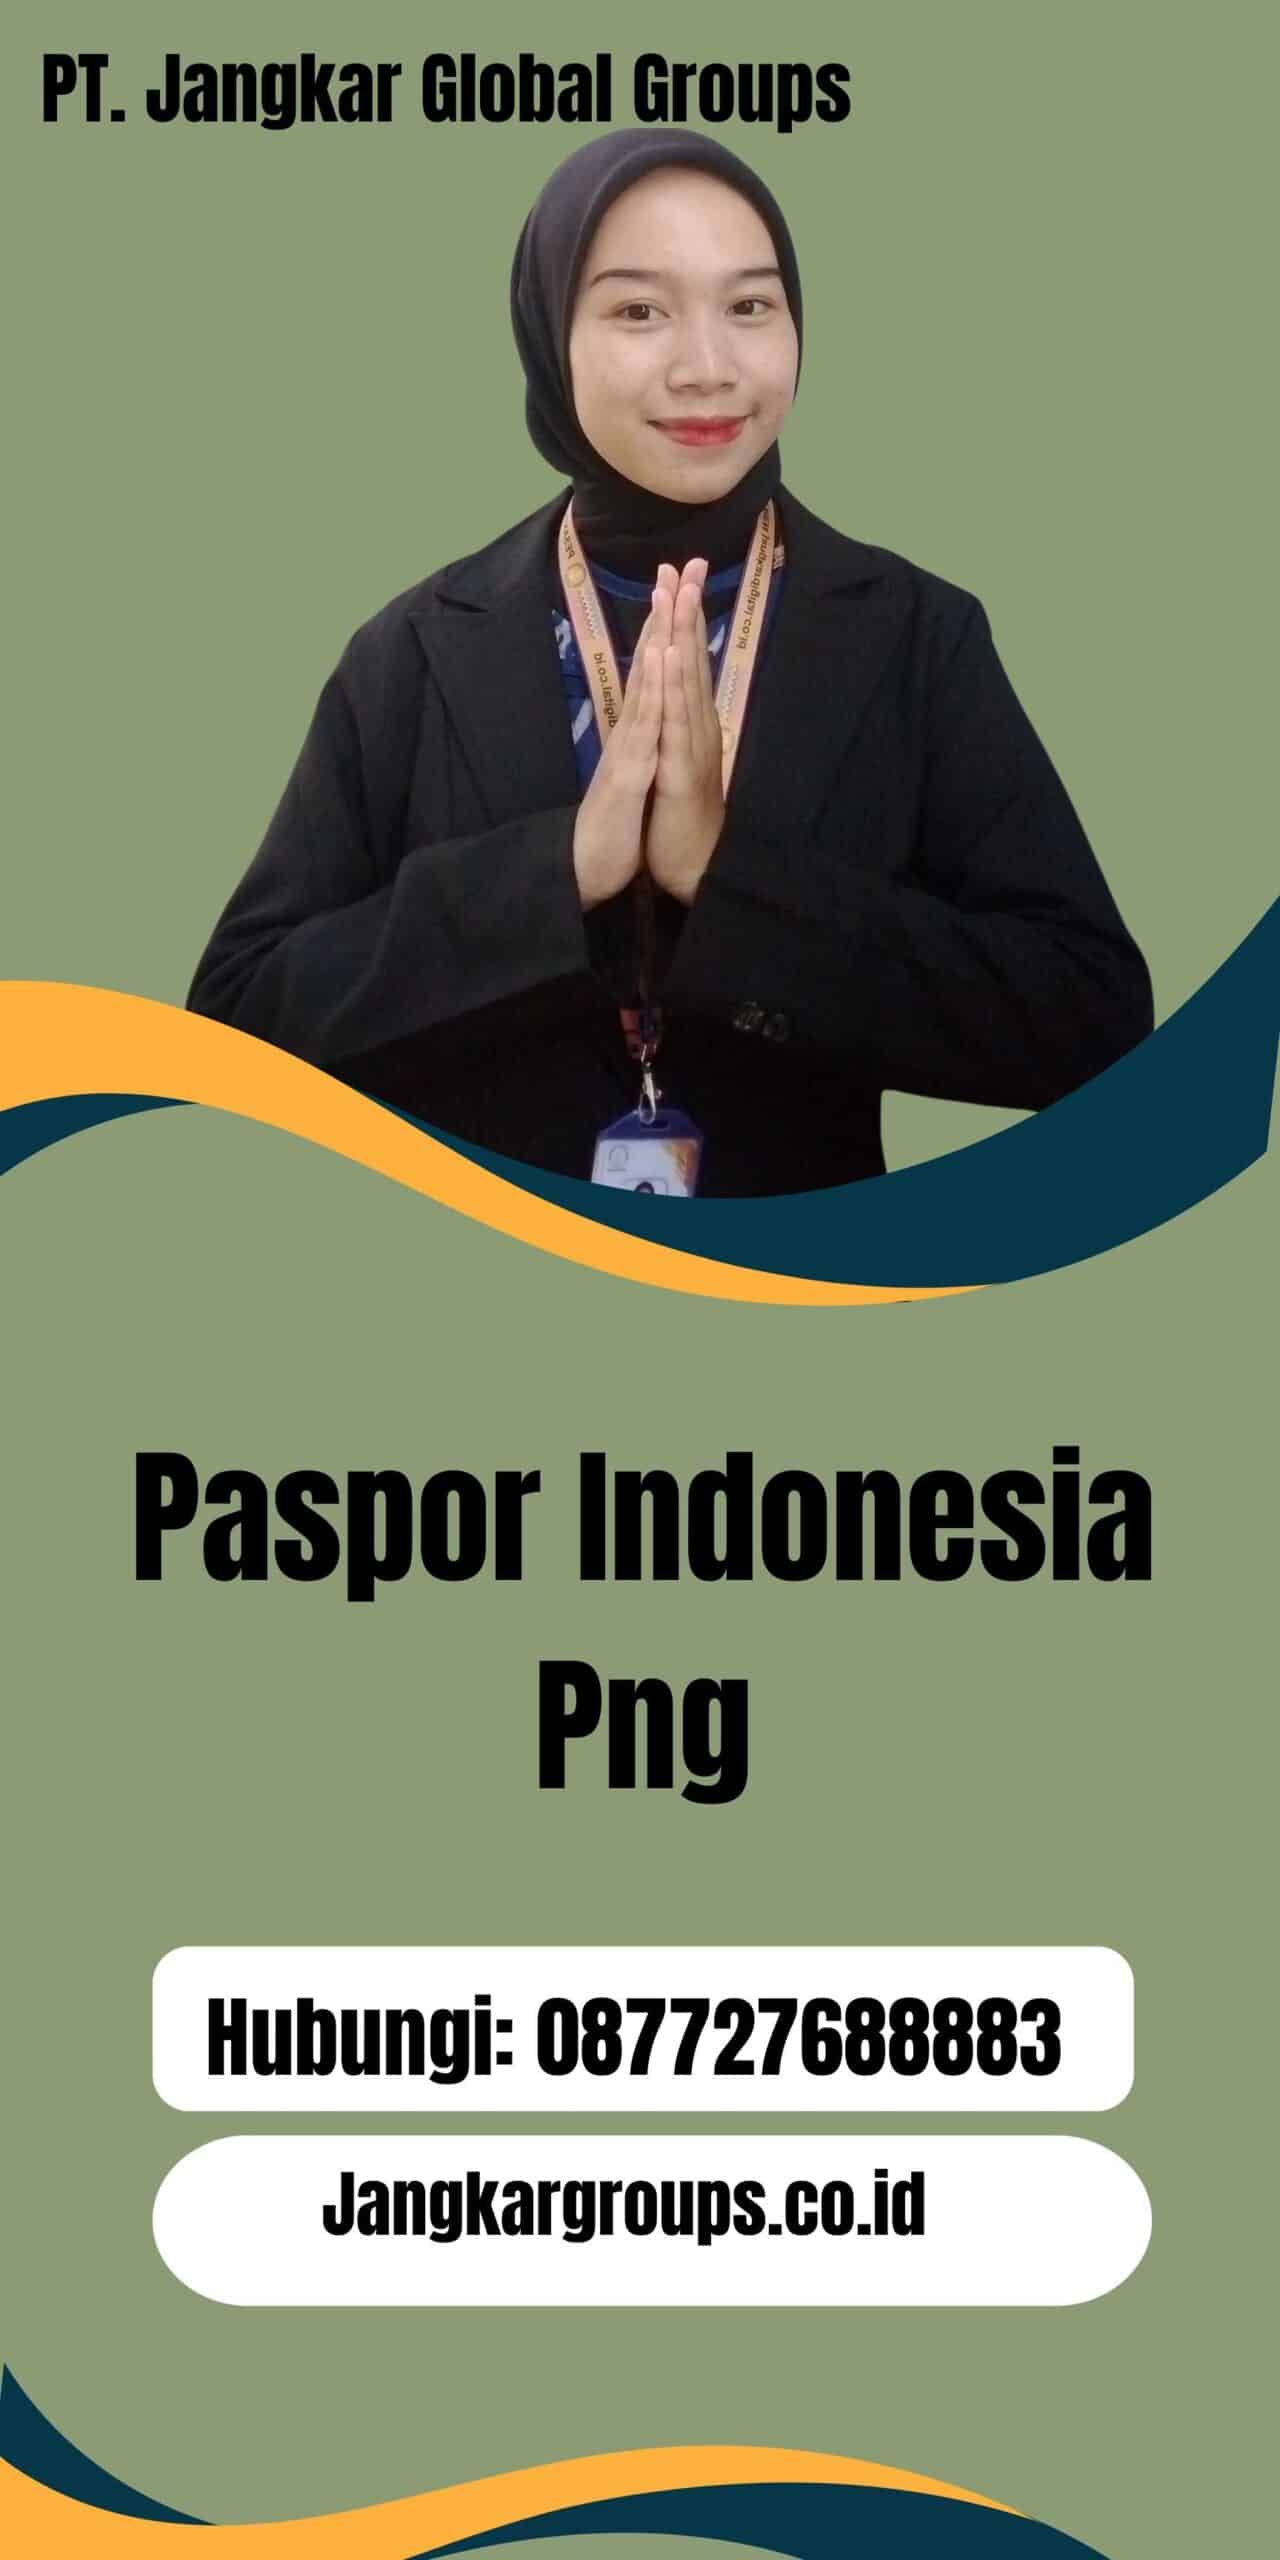 Paspor Indonesia Png